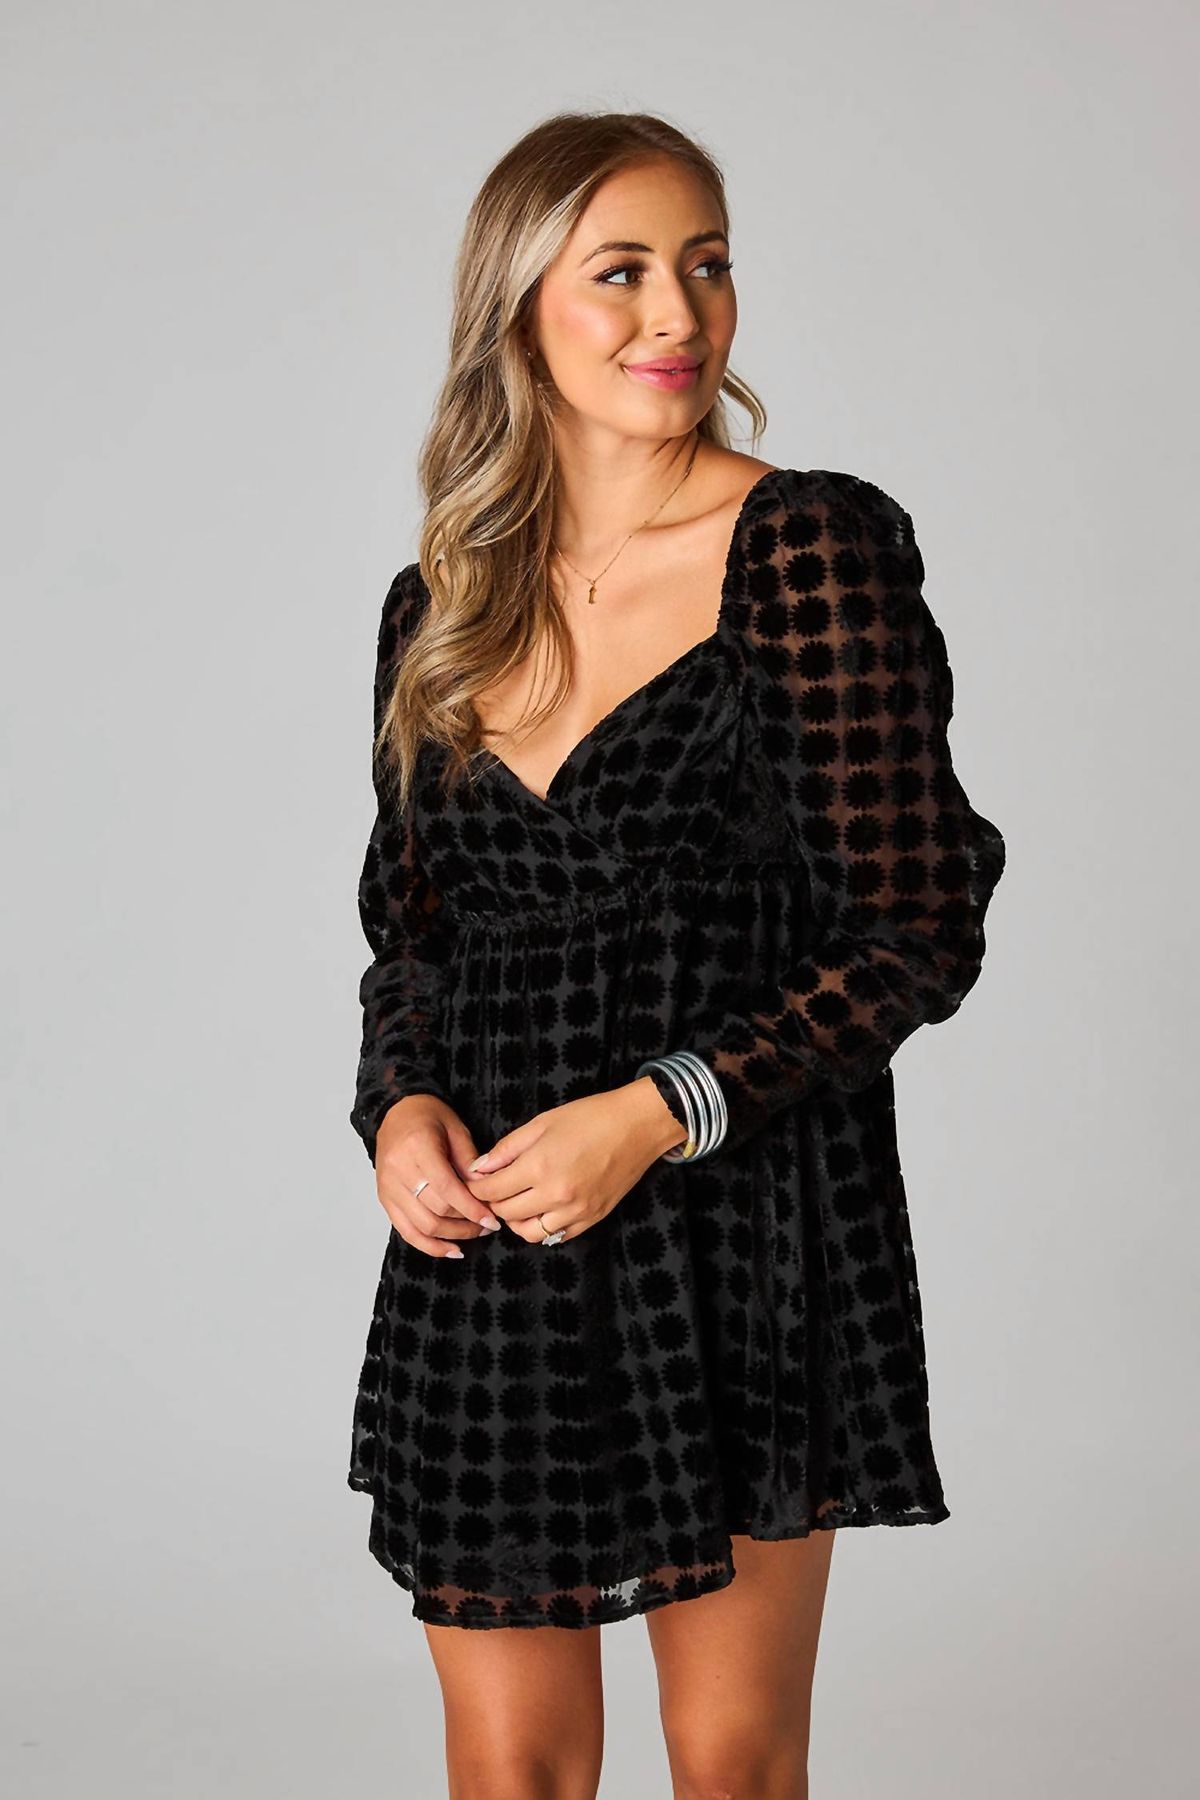 Style 1-99416894-2901 BUDDYLOVE Size M Velvet Black Cocktail Dress on Queenly